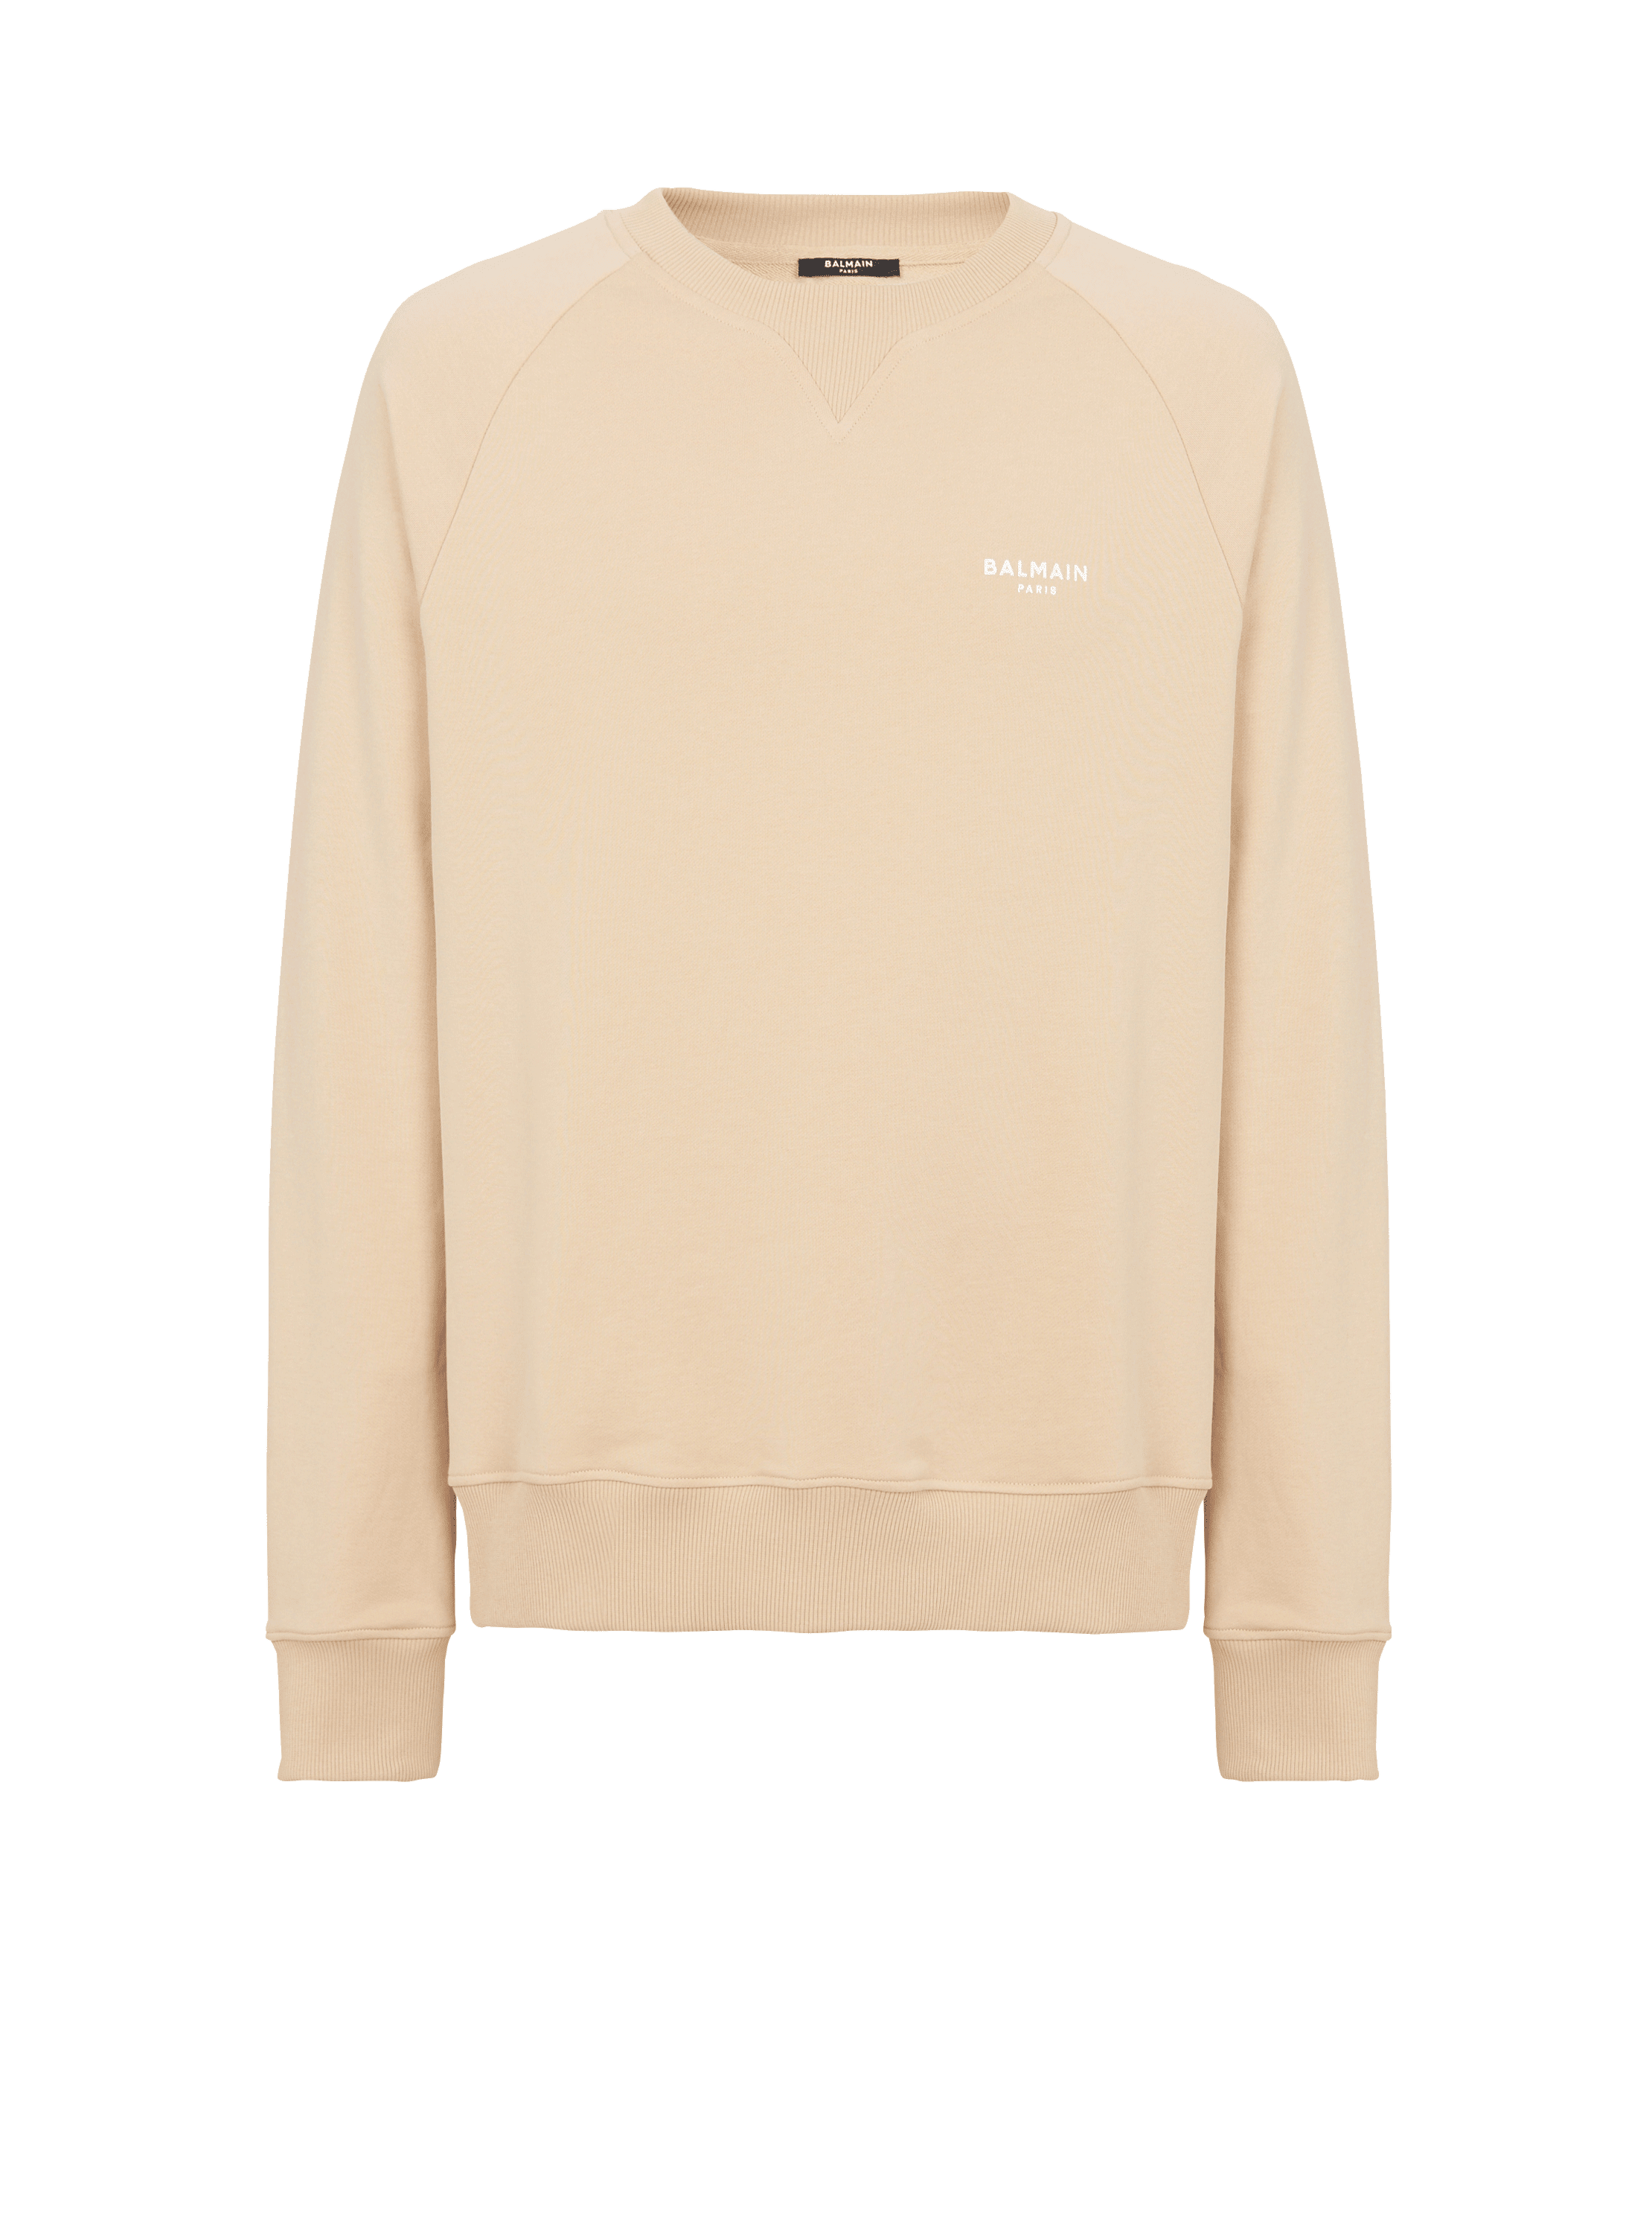 Beflocktes Balmain Sweatshirt, beige, hi-res